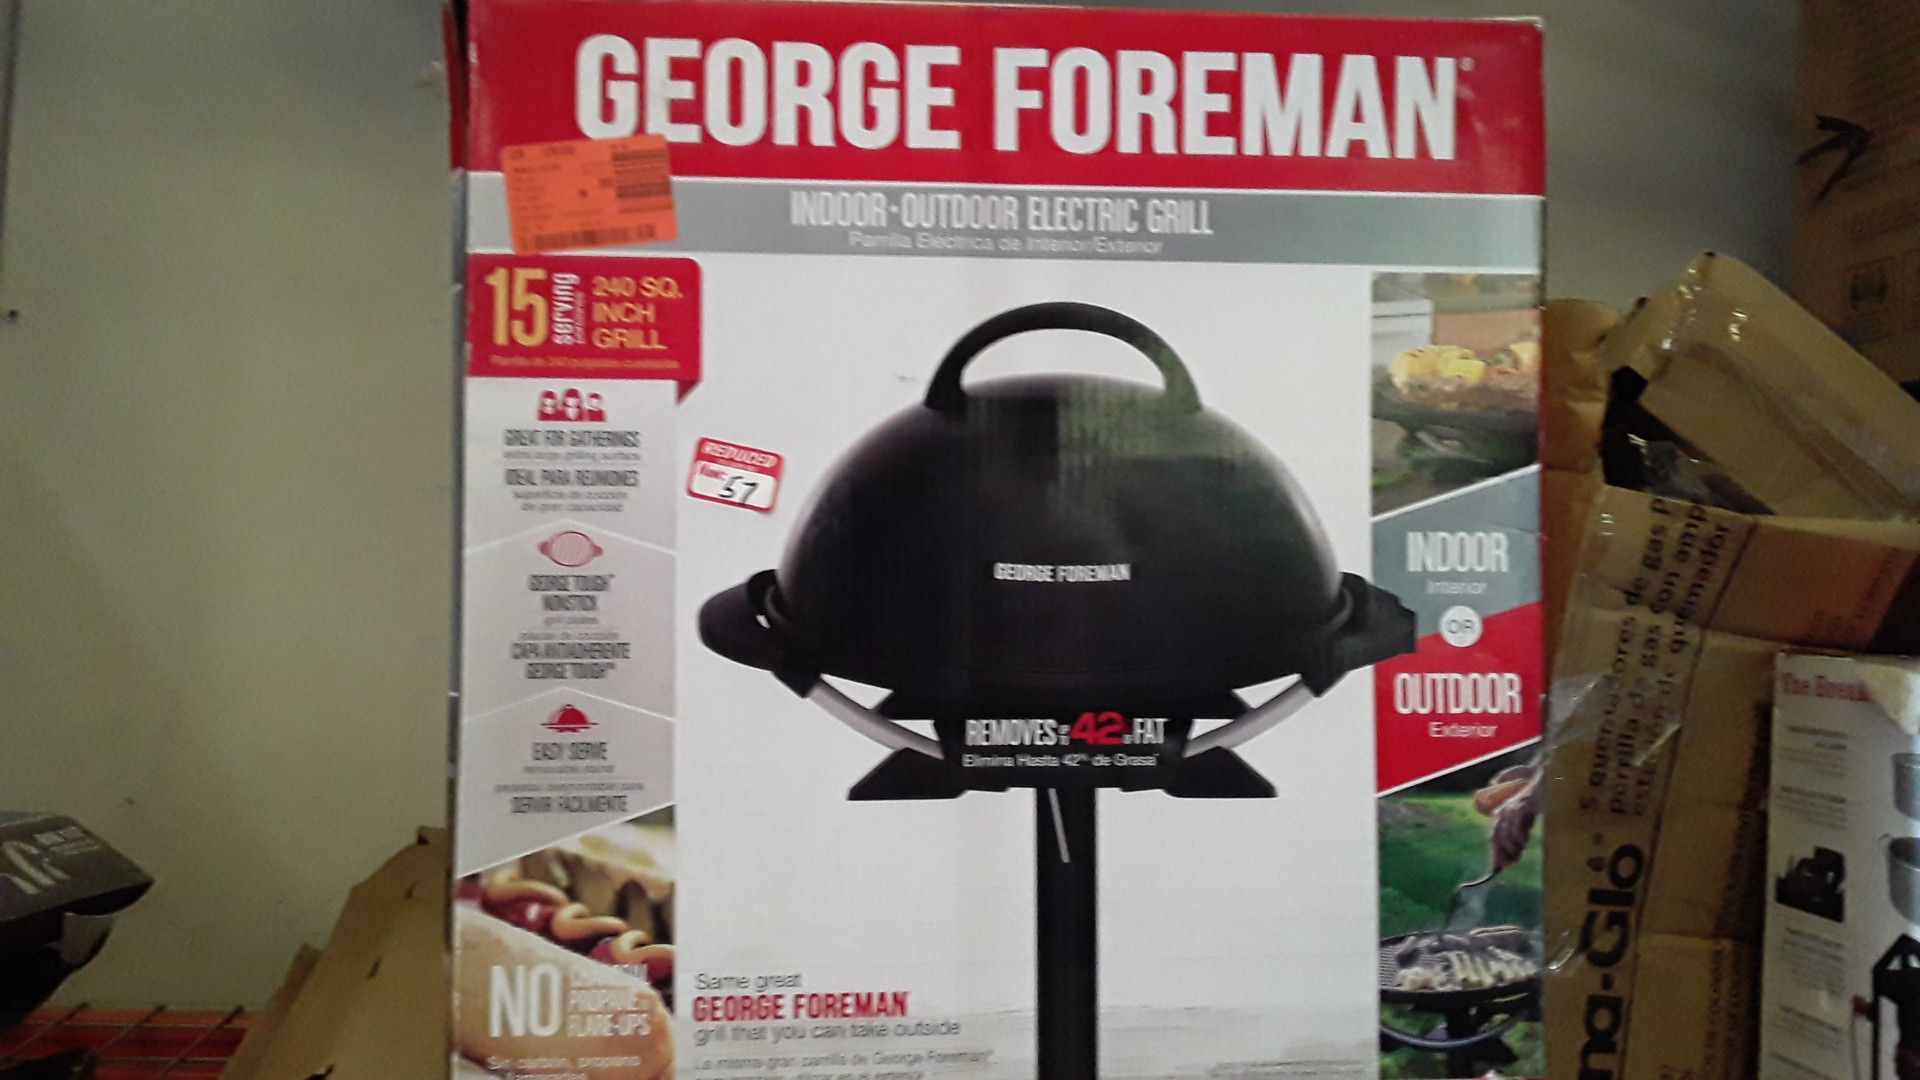 George foreman bbq grill